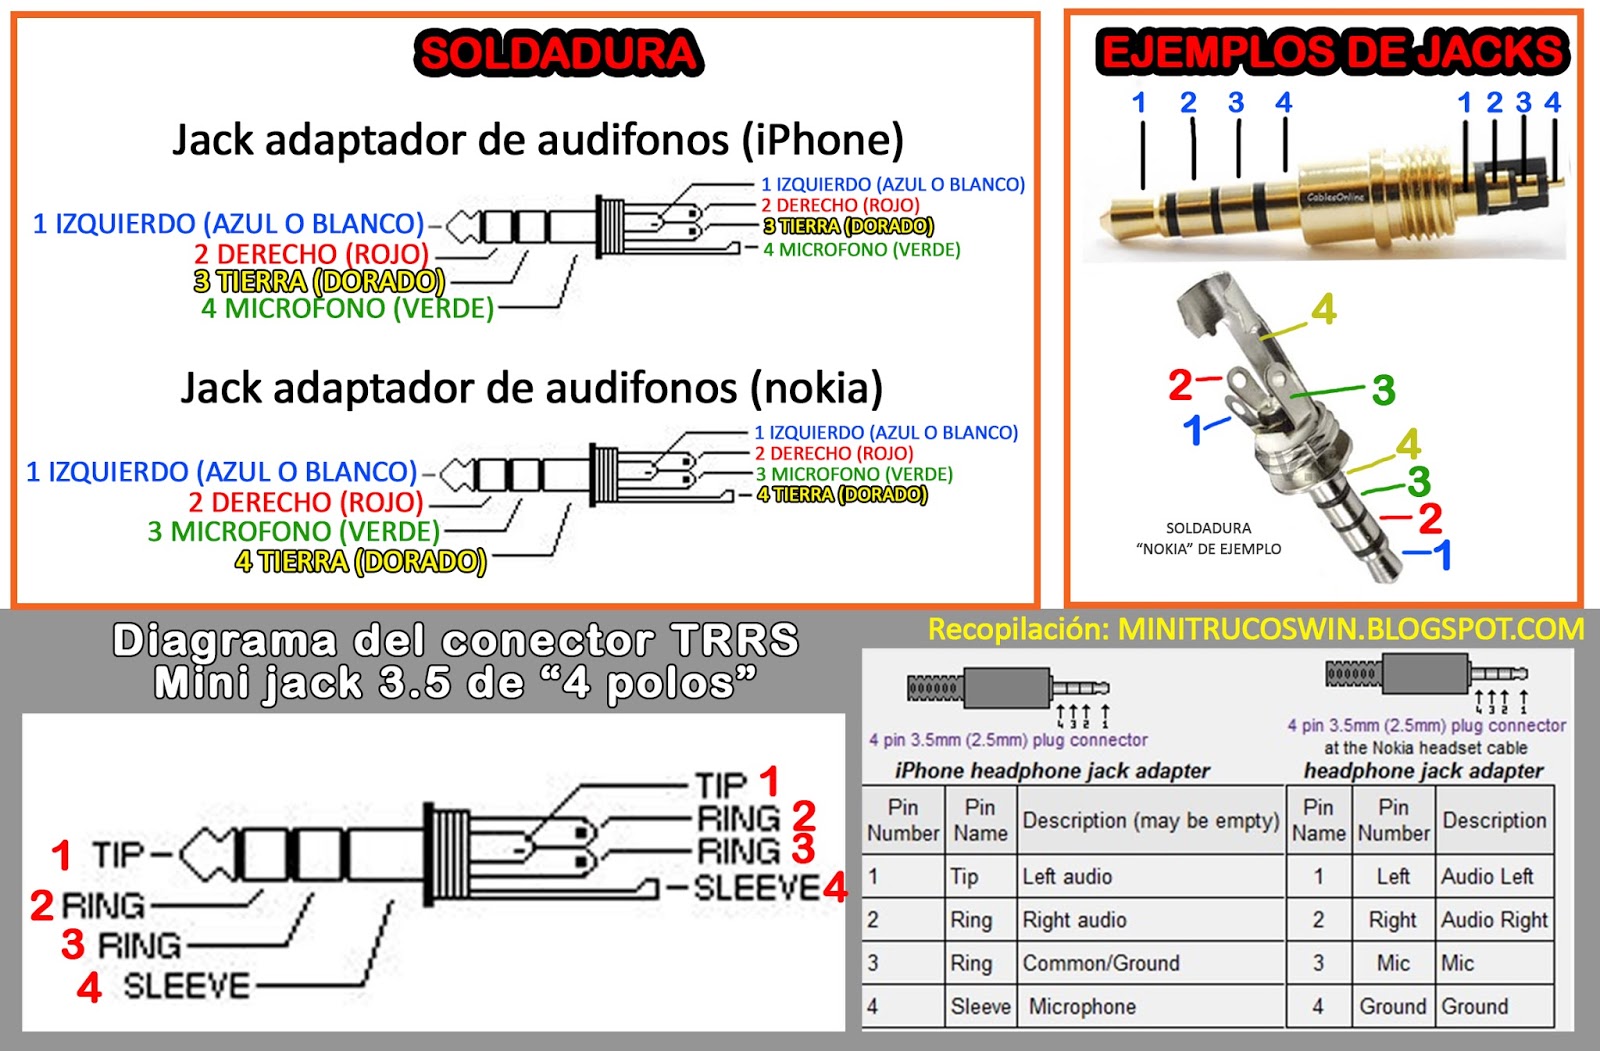 - Soldering the cable with a 3.5mm mini jack - elektroda.com xbox headphone jack wiring diagram 